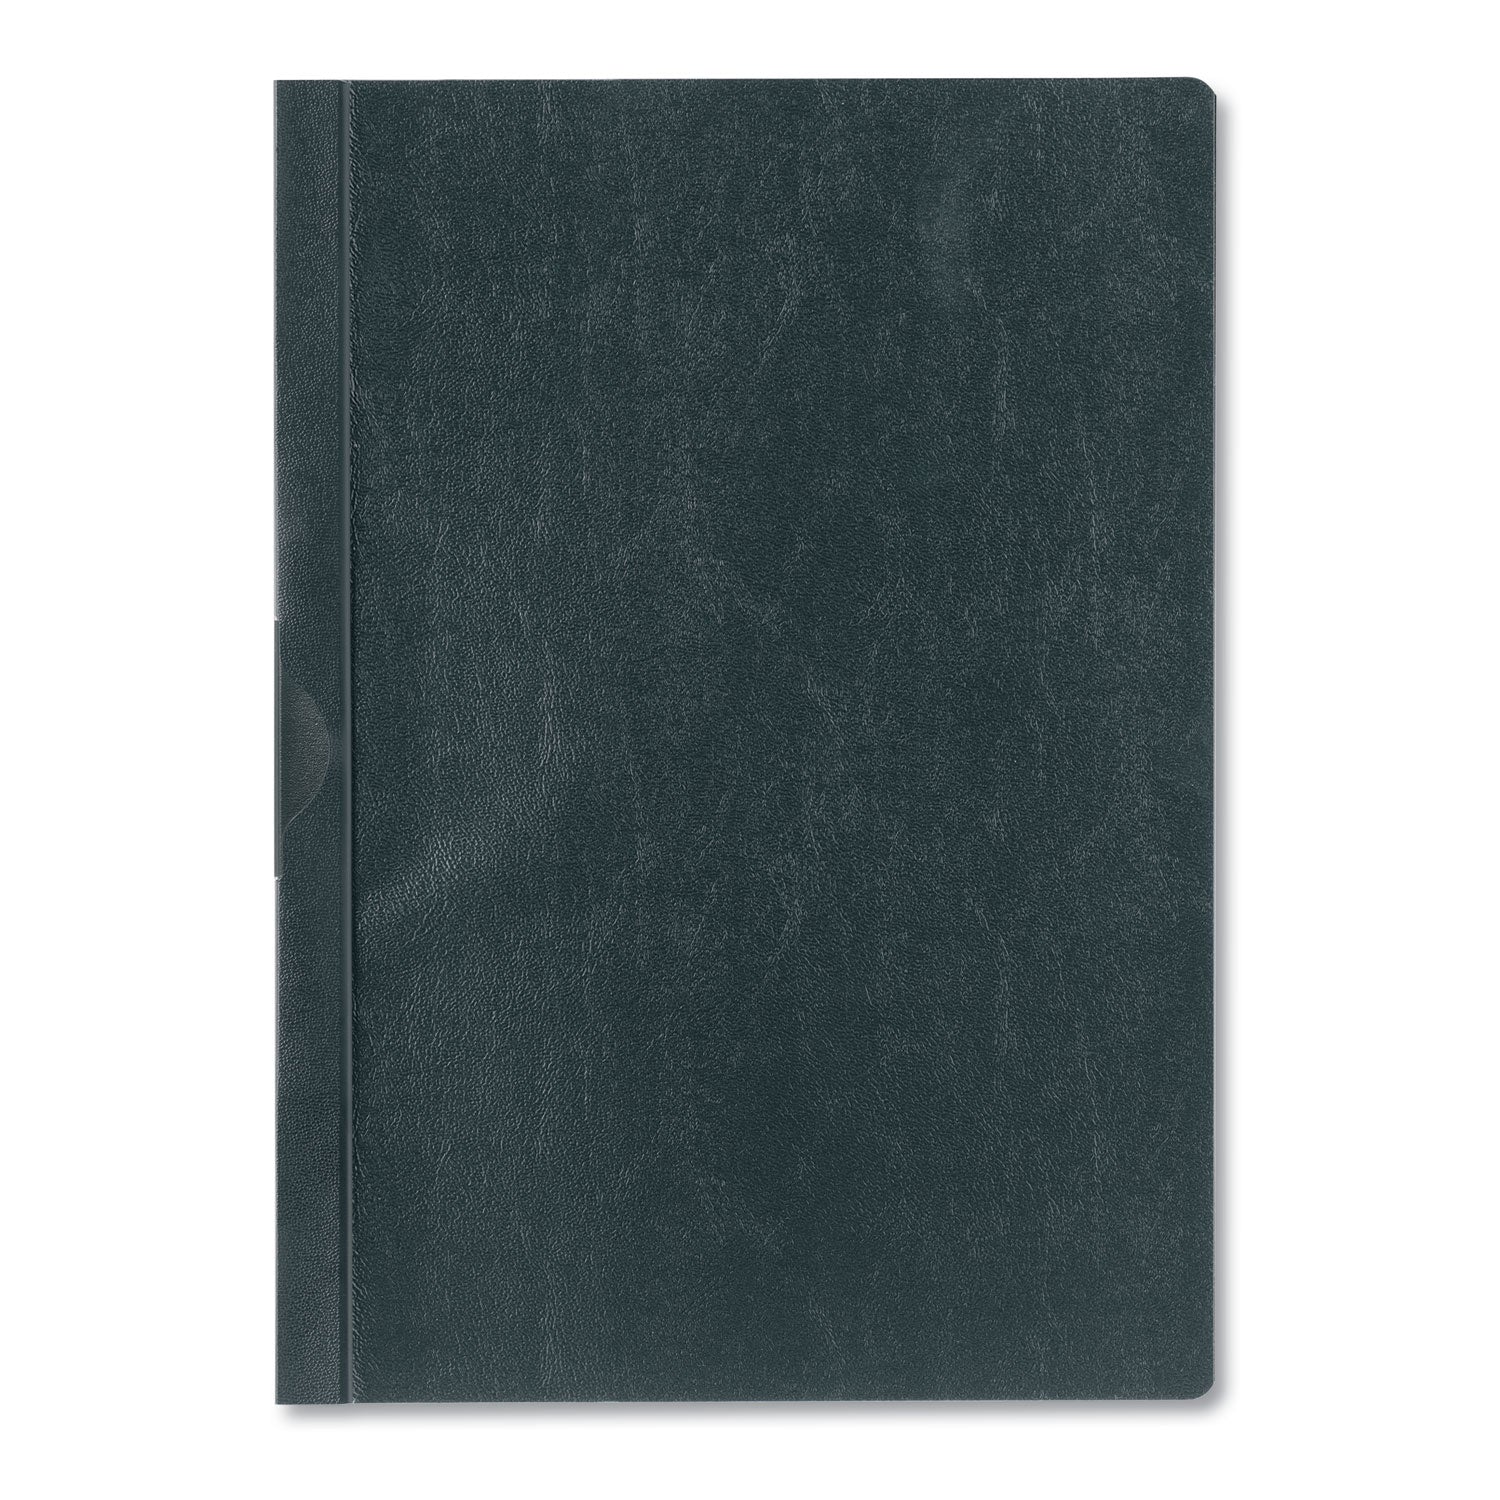 DuraClip Report Cover, Clip Fastener, 8.5 x 11, Clear/Black, 25/Box - 